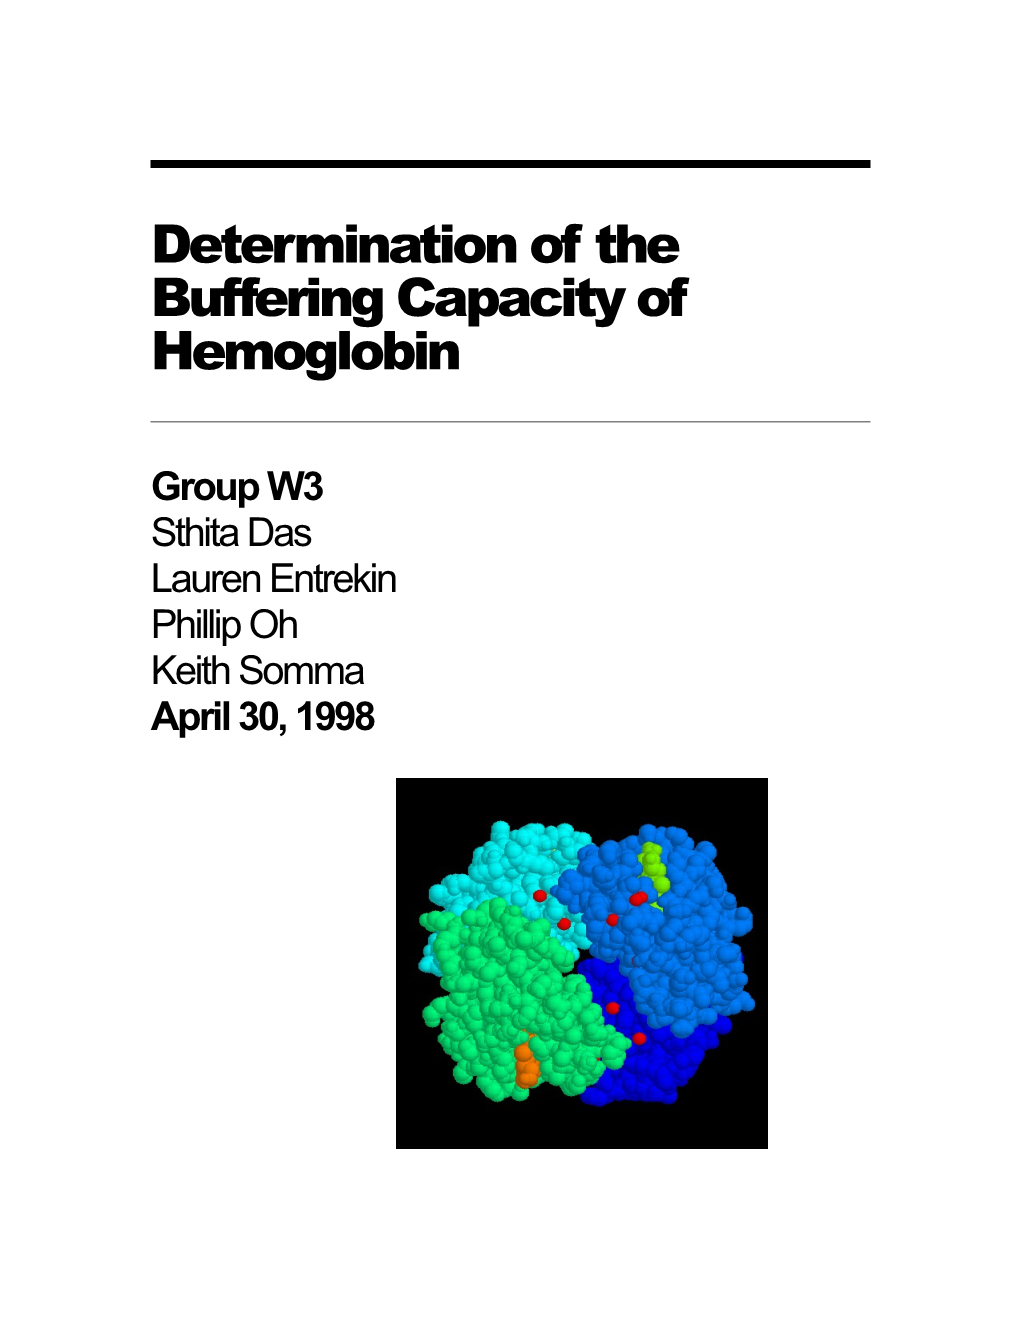 Determination of the Buffering Capacity of Hemoglobin